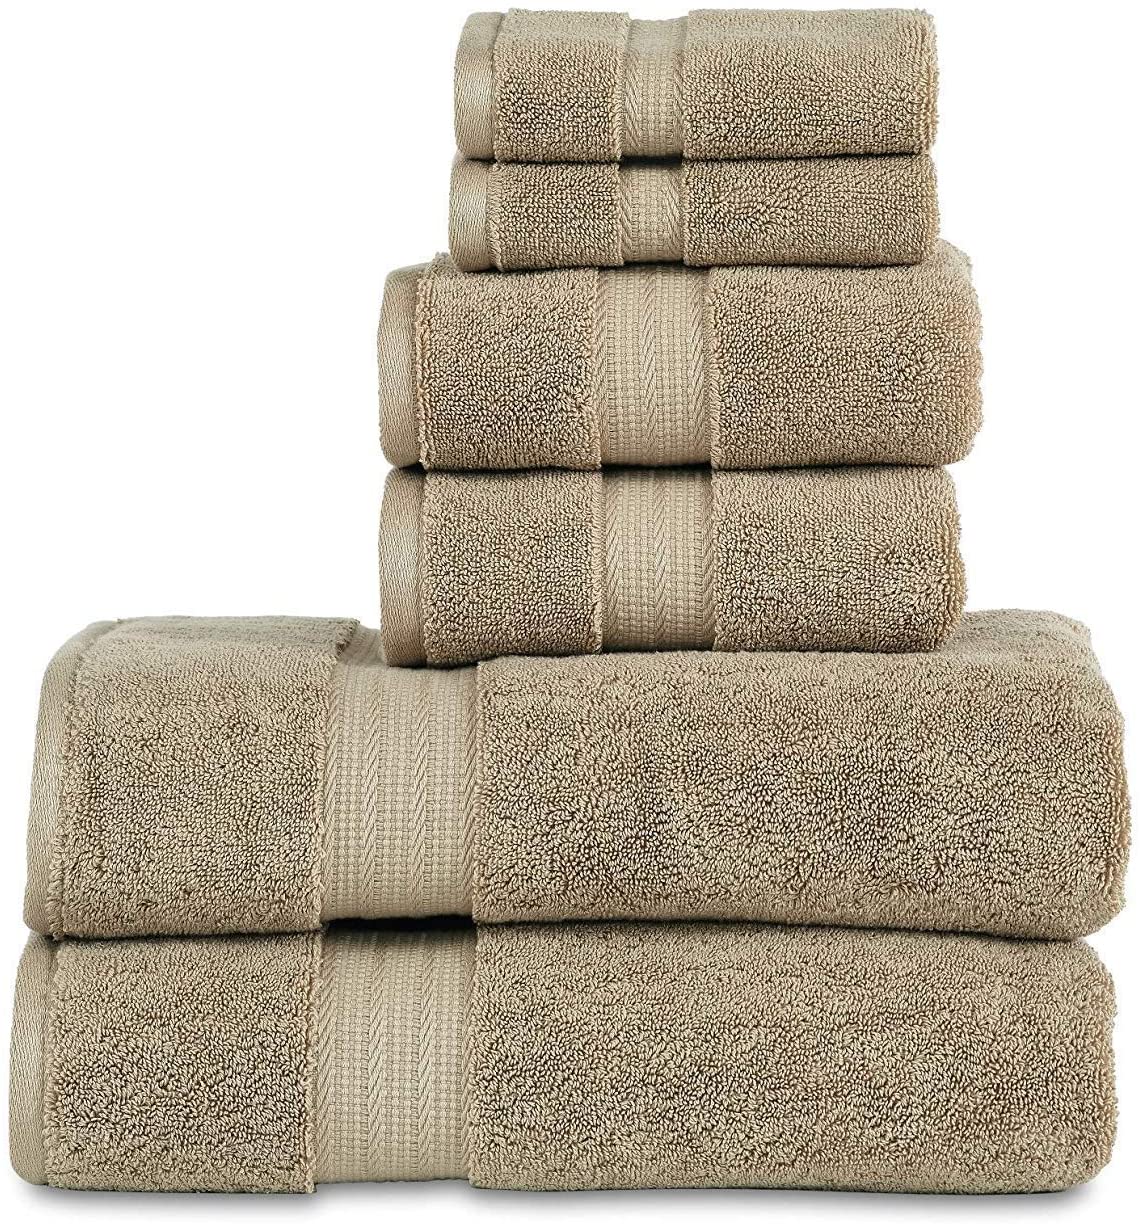 Luxury 6pc Taupe 100% Cotton Towel Set - 1000gsm